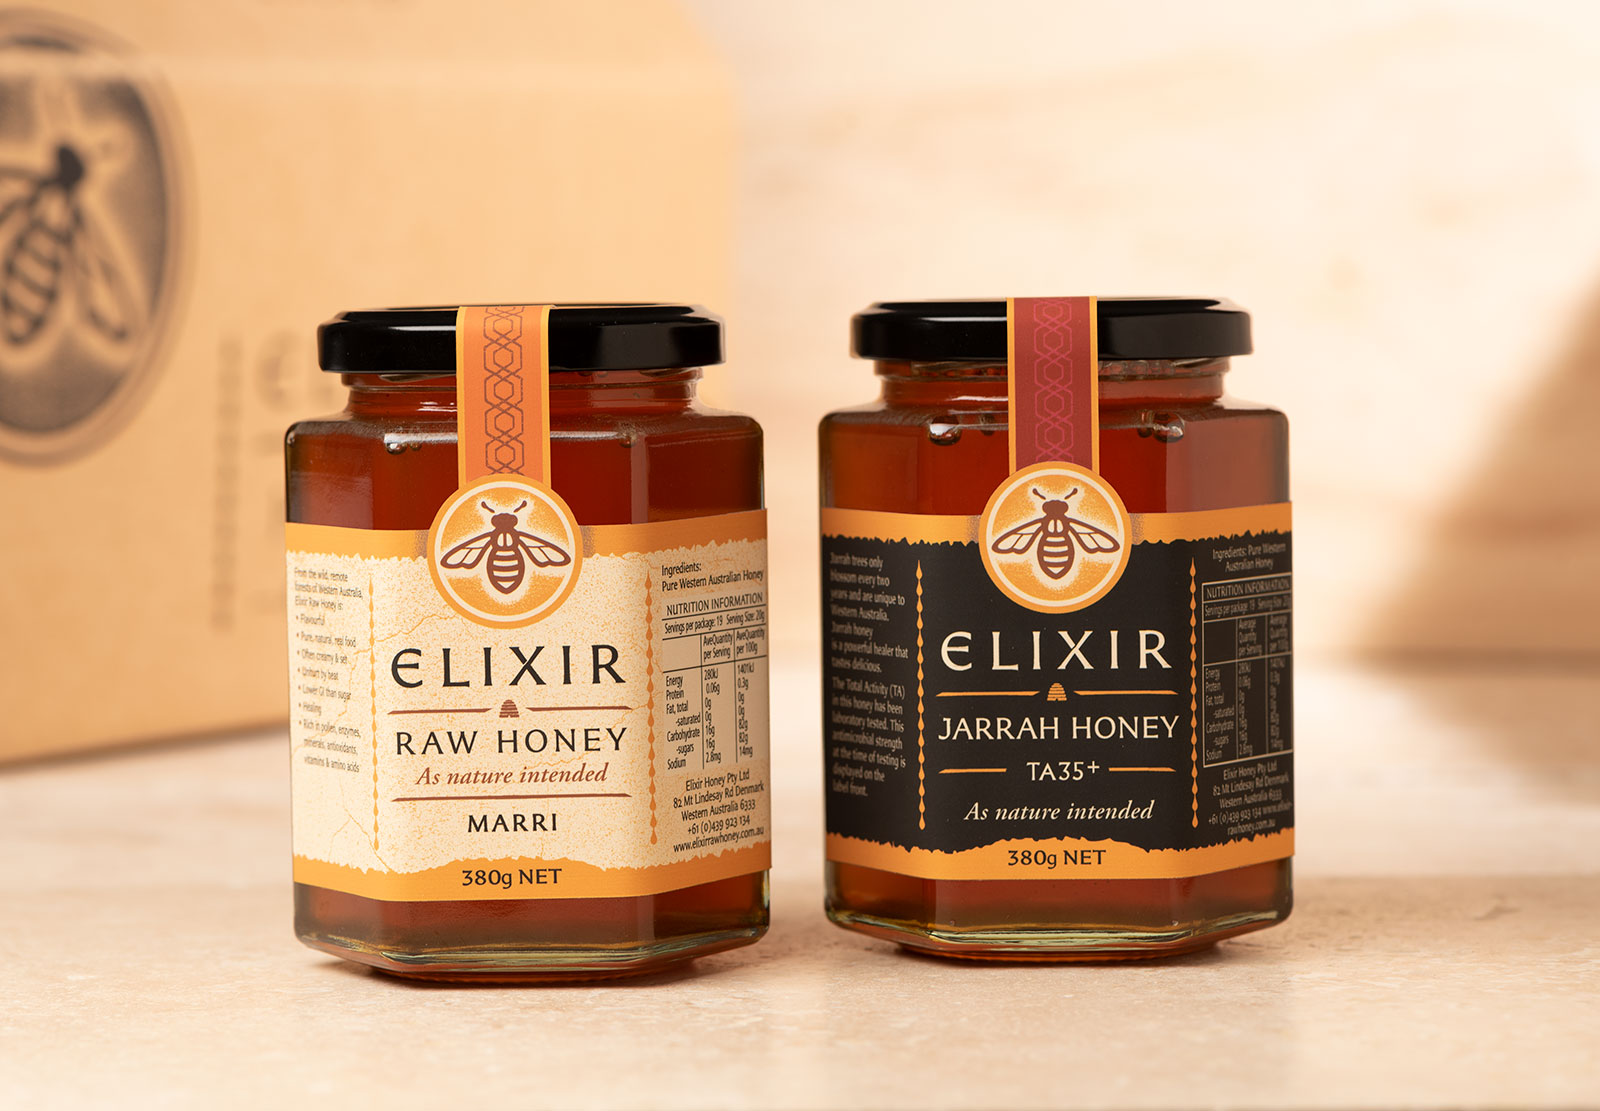 Elixir raw honey packaging design